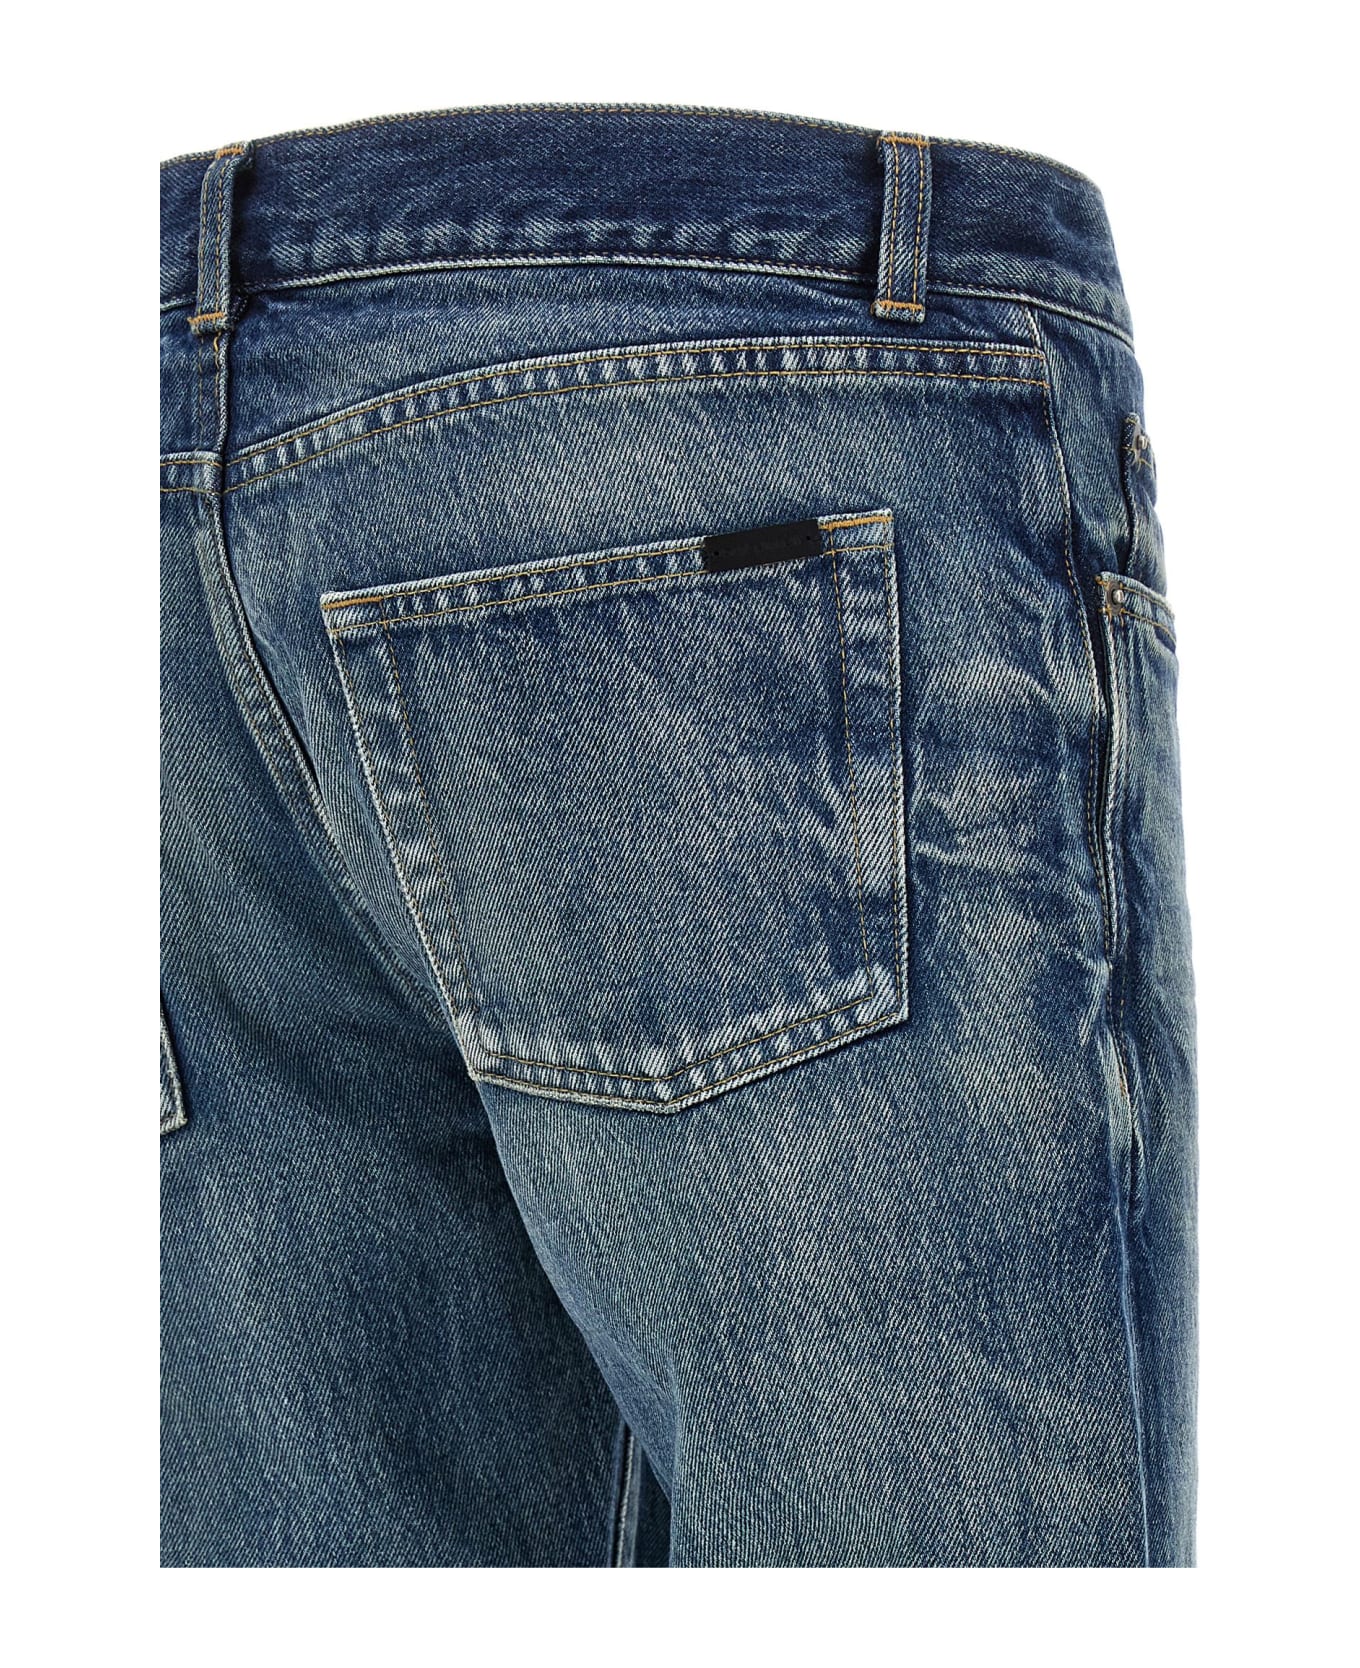 Saint Laurent Slim Fit Denim Jeans - Blue デニム